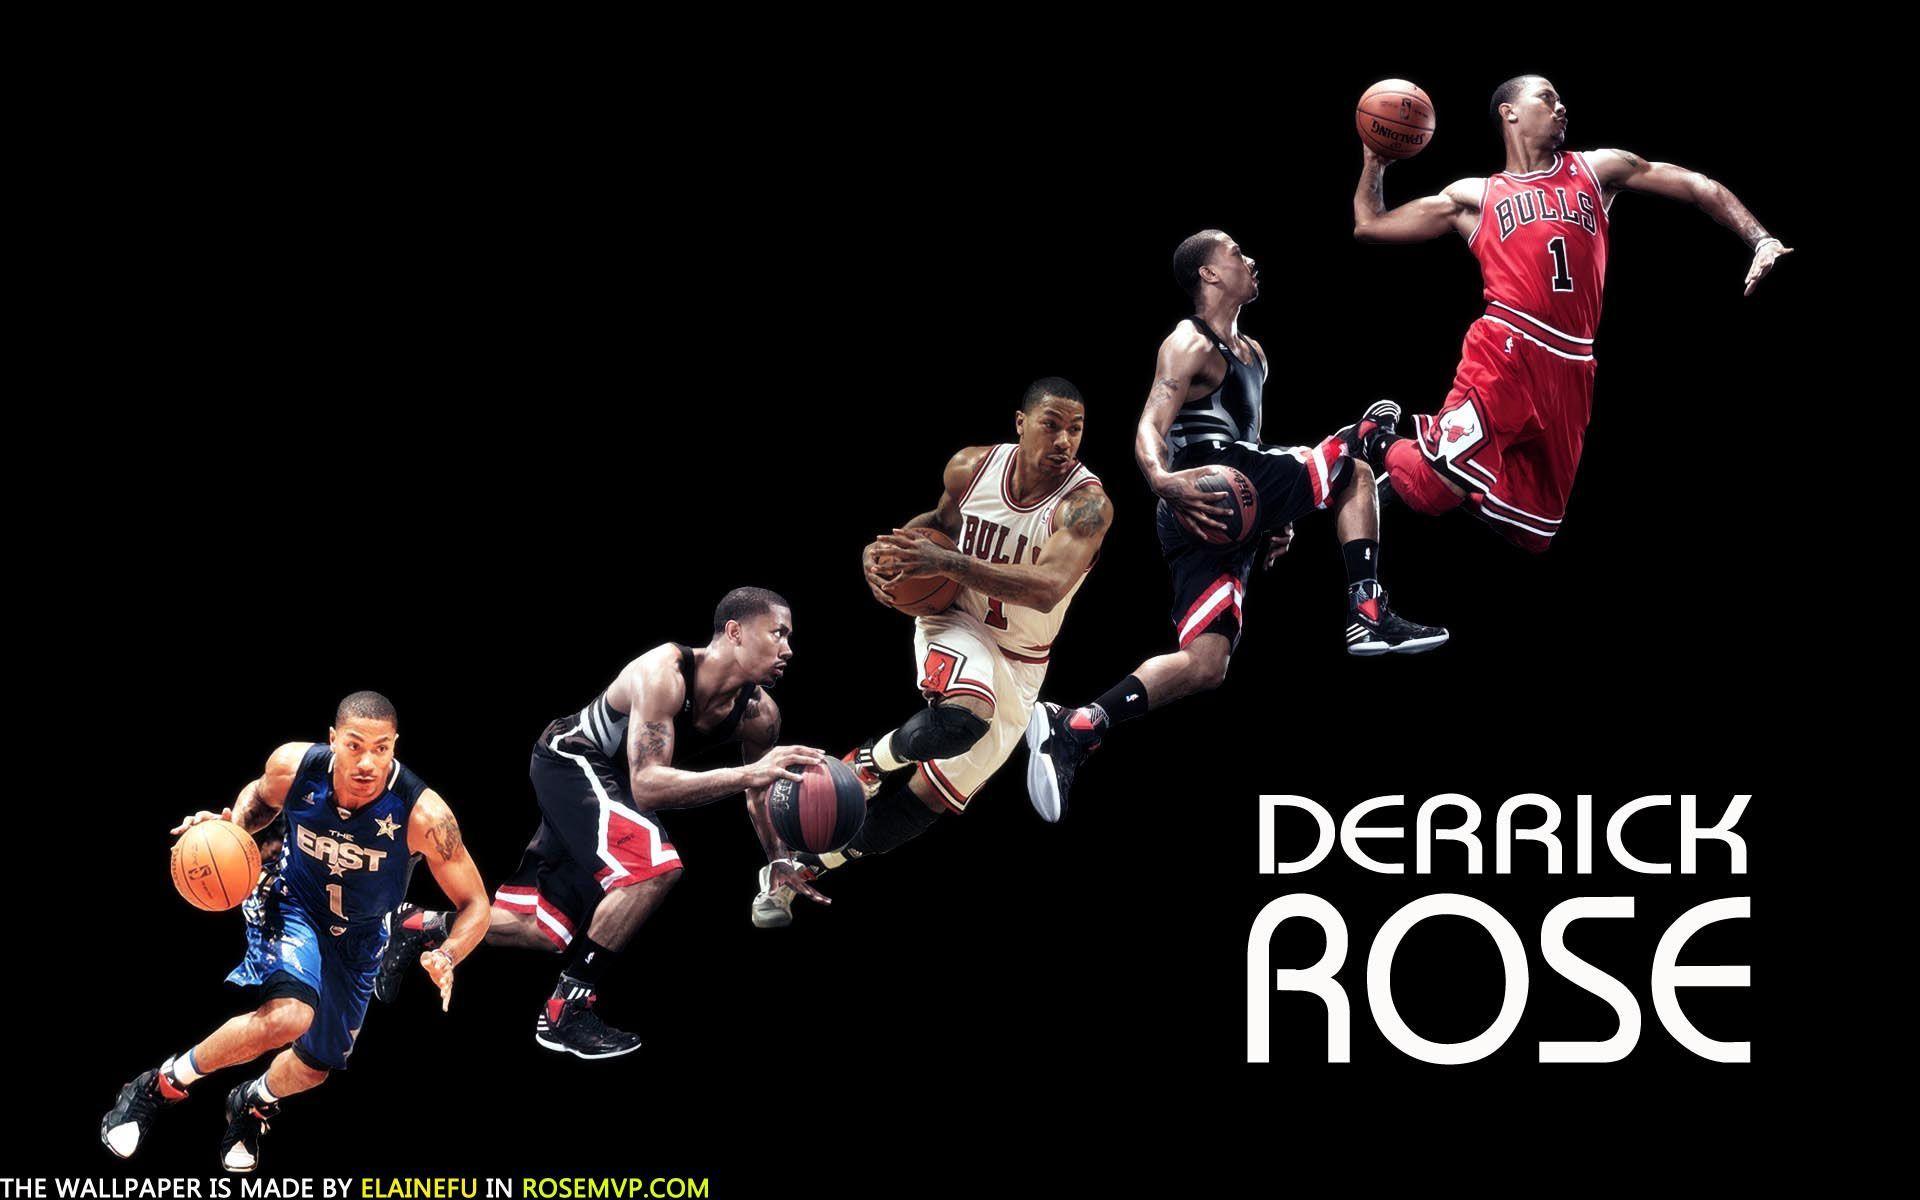 Derrick Rose Logo Wallpaper. d rose